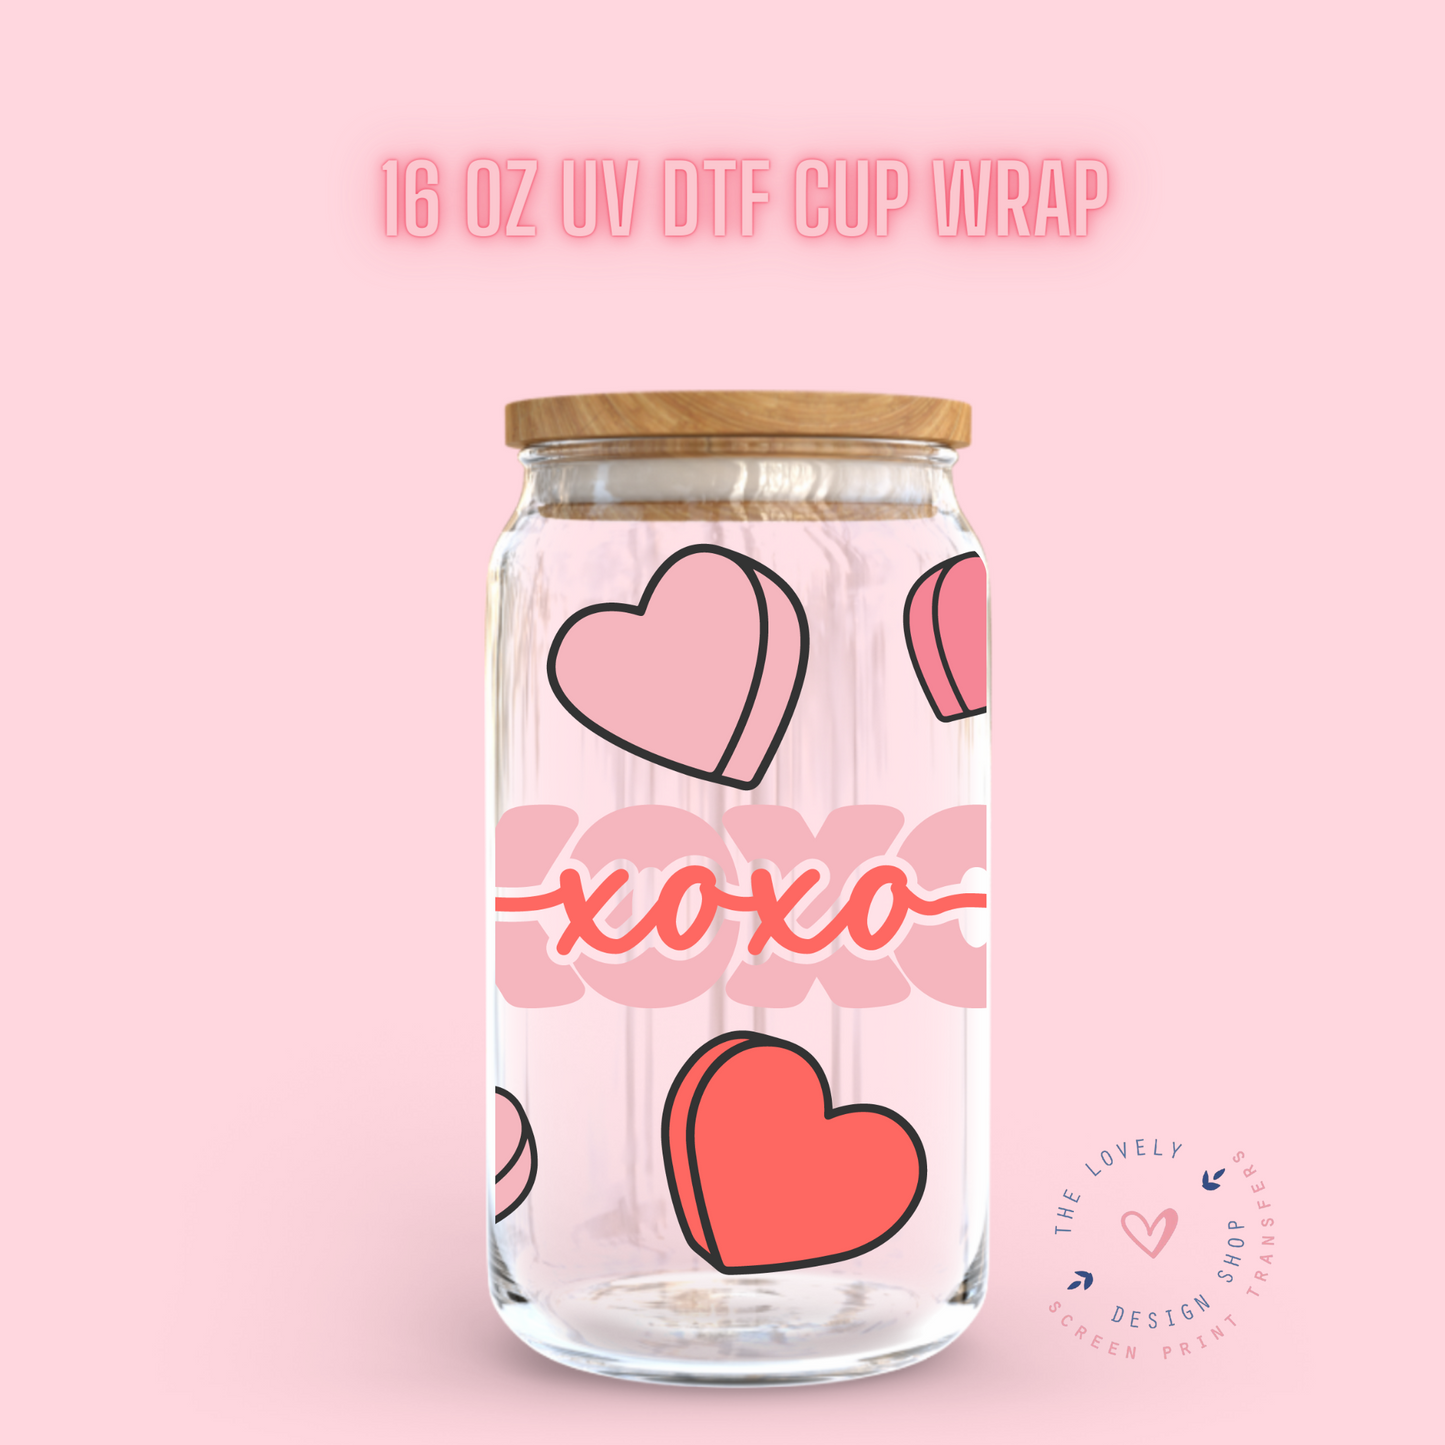 XOXO Love Theme - UV DTF 16 oz Libbey Cup Wrap (Ready to Ship) Dec 26